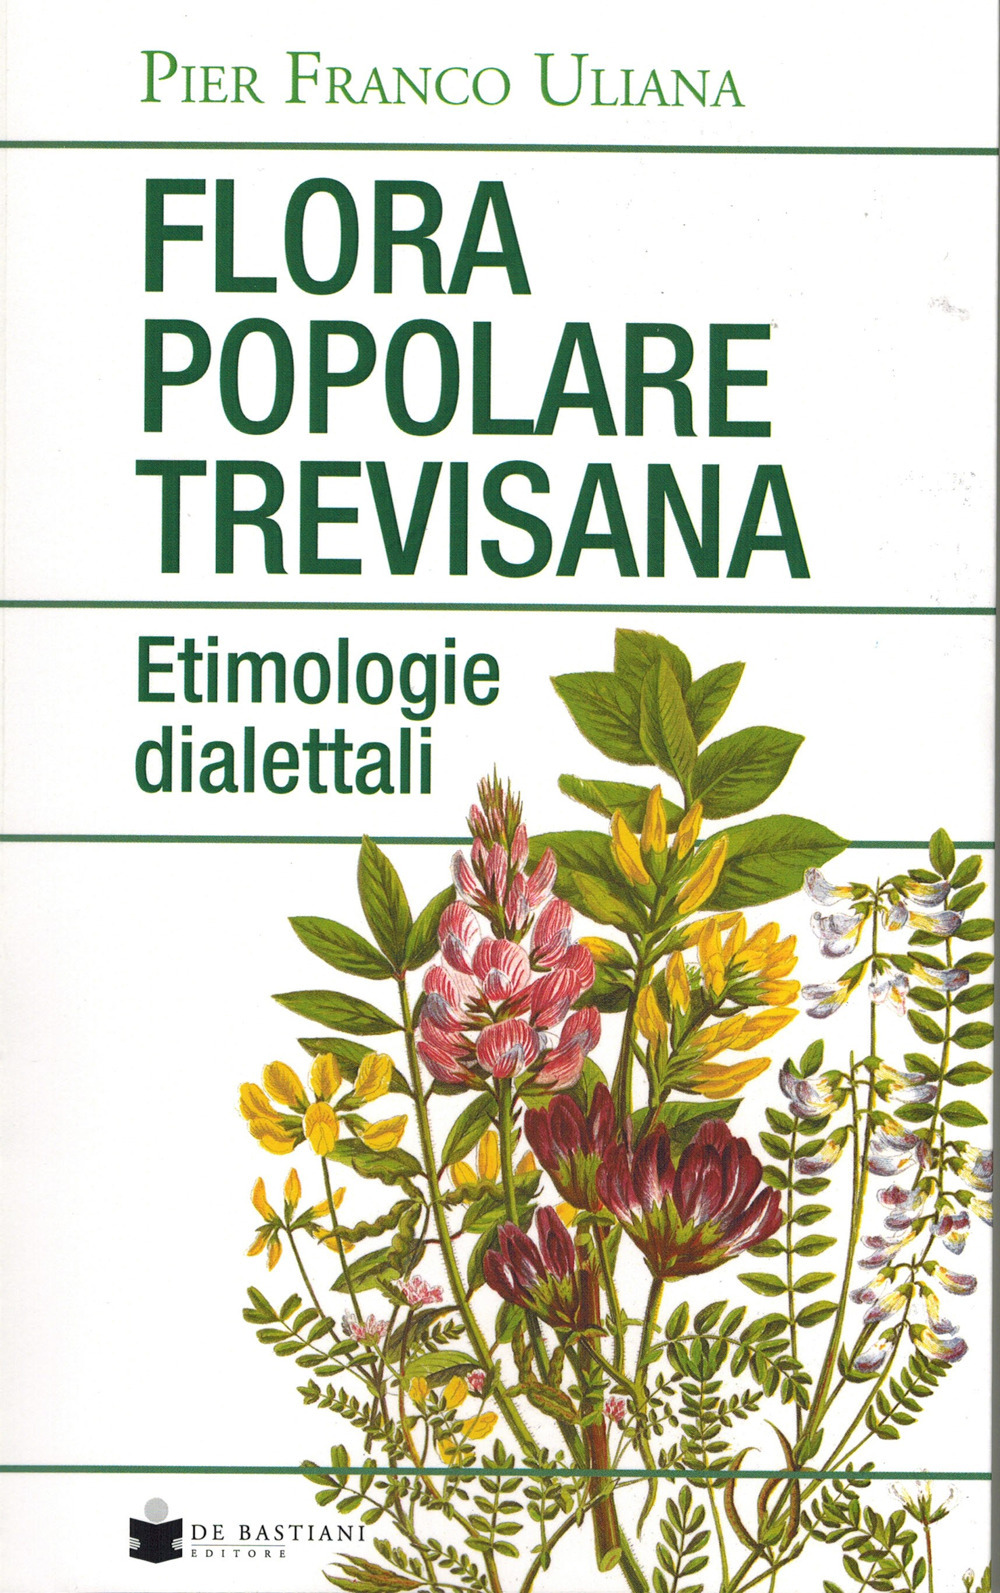 Flora popolare trevisana. Etimologie dialettali